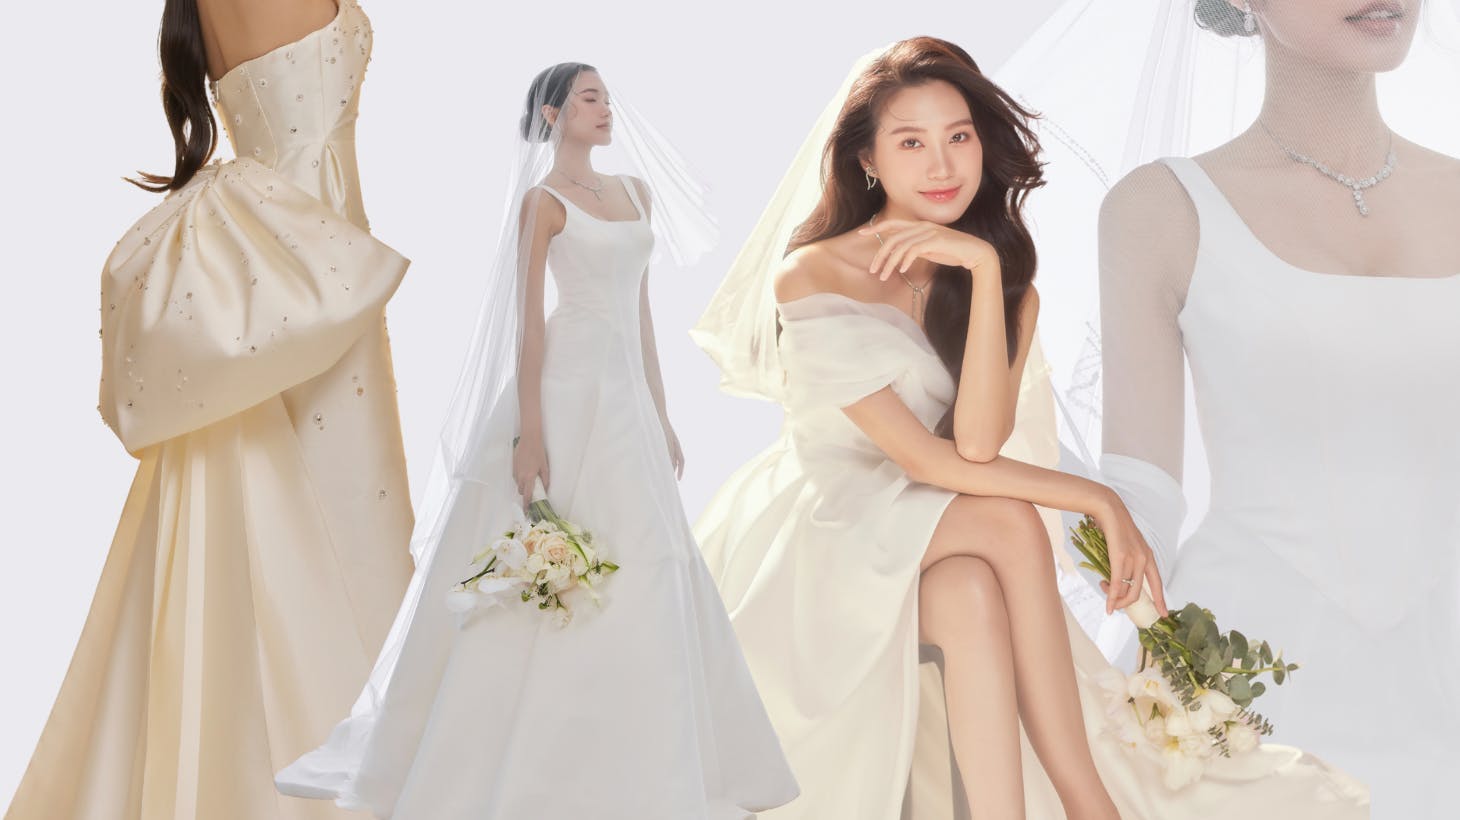 dress fashion formal wear gown wedding gown adult female person woman bride